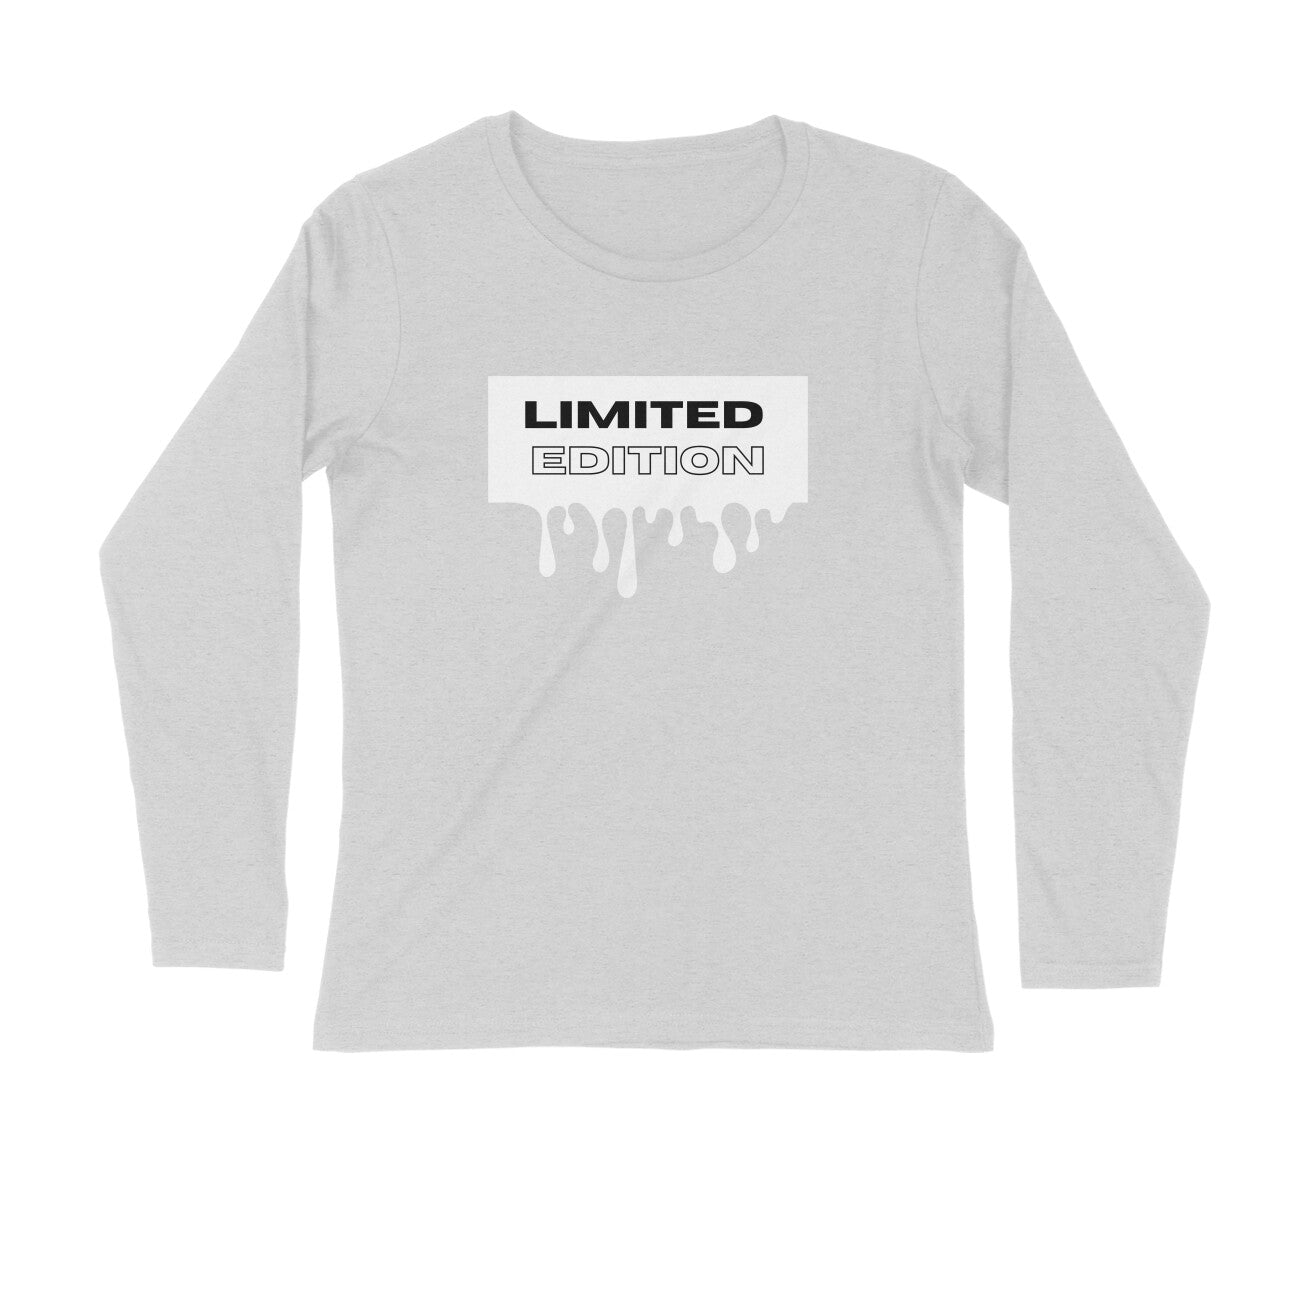 Limited Edition - Long Sleeve Unisex Tshirt